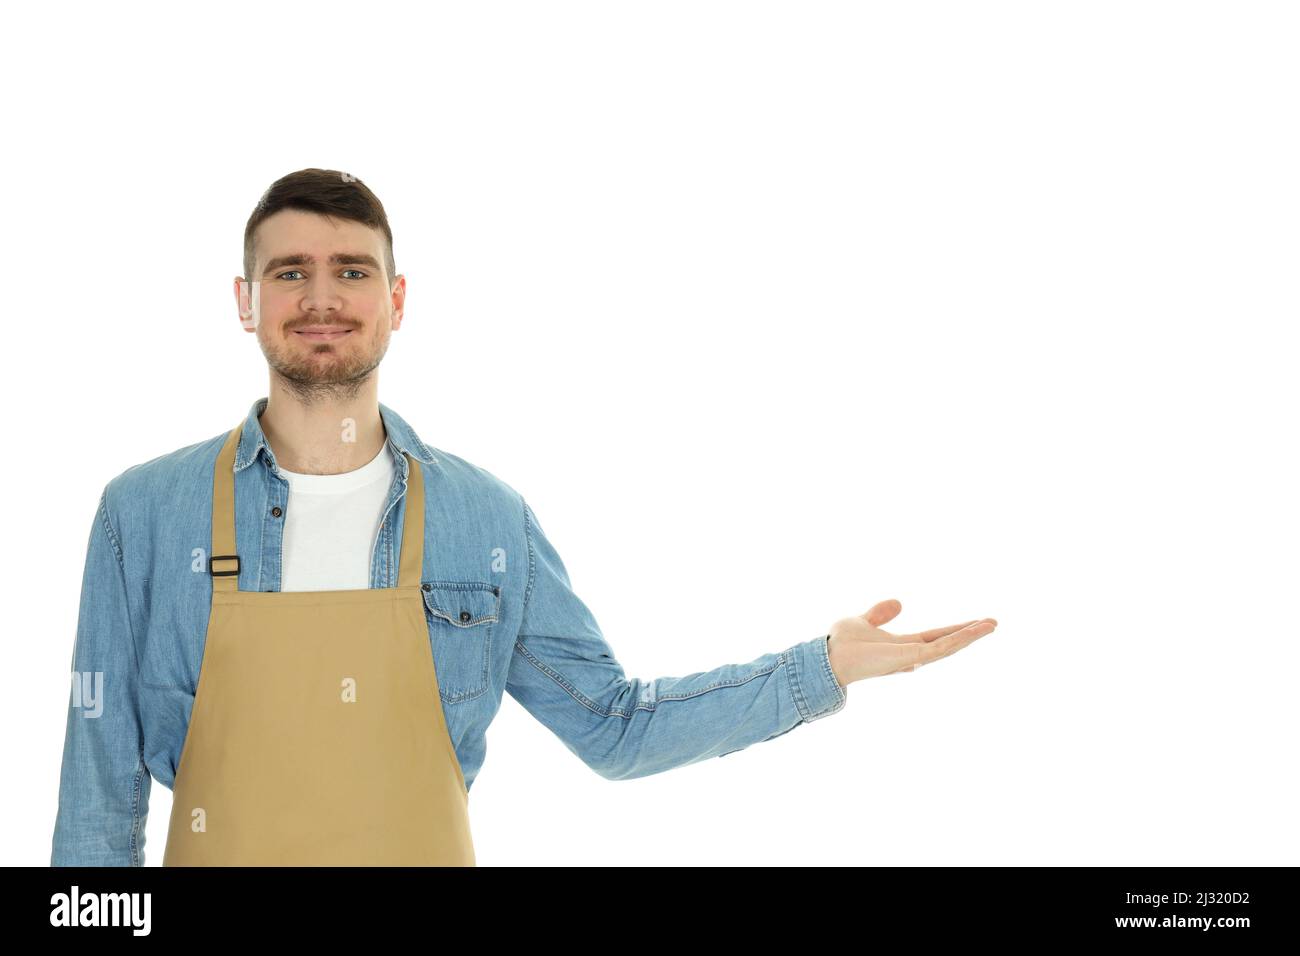 Young man waiter isolated on white background Stock Photo